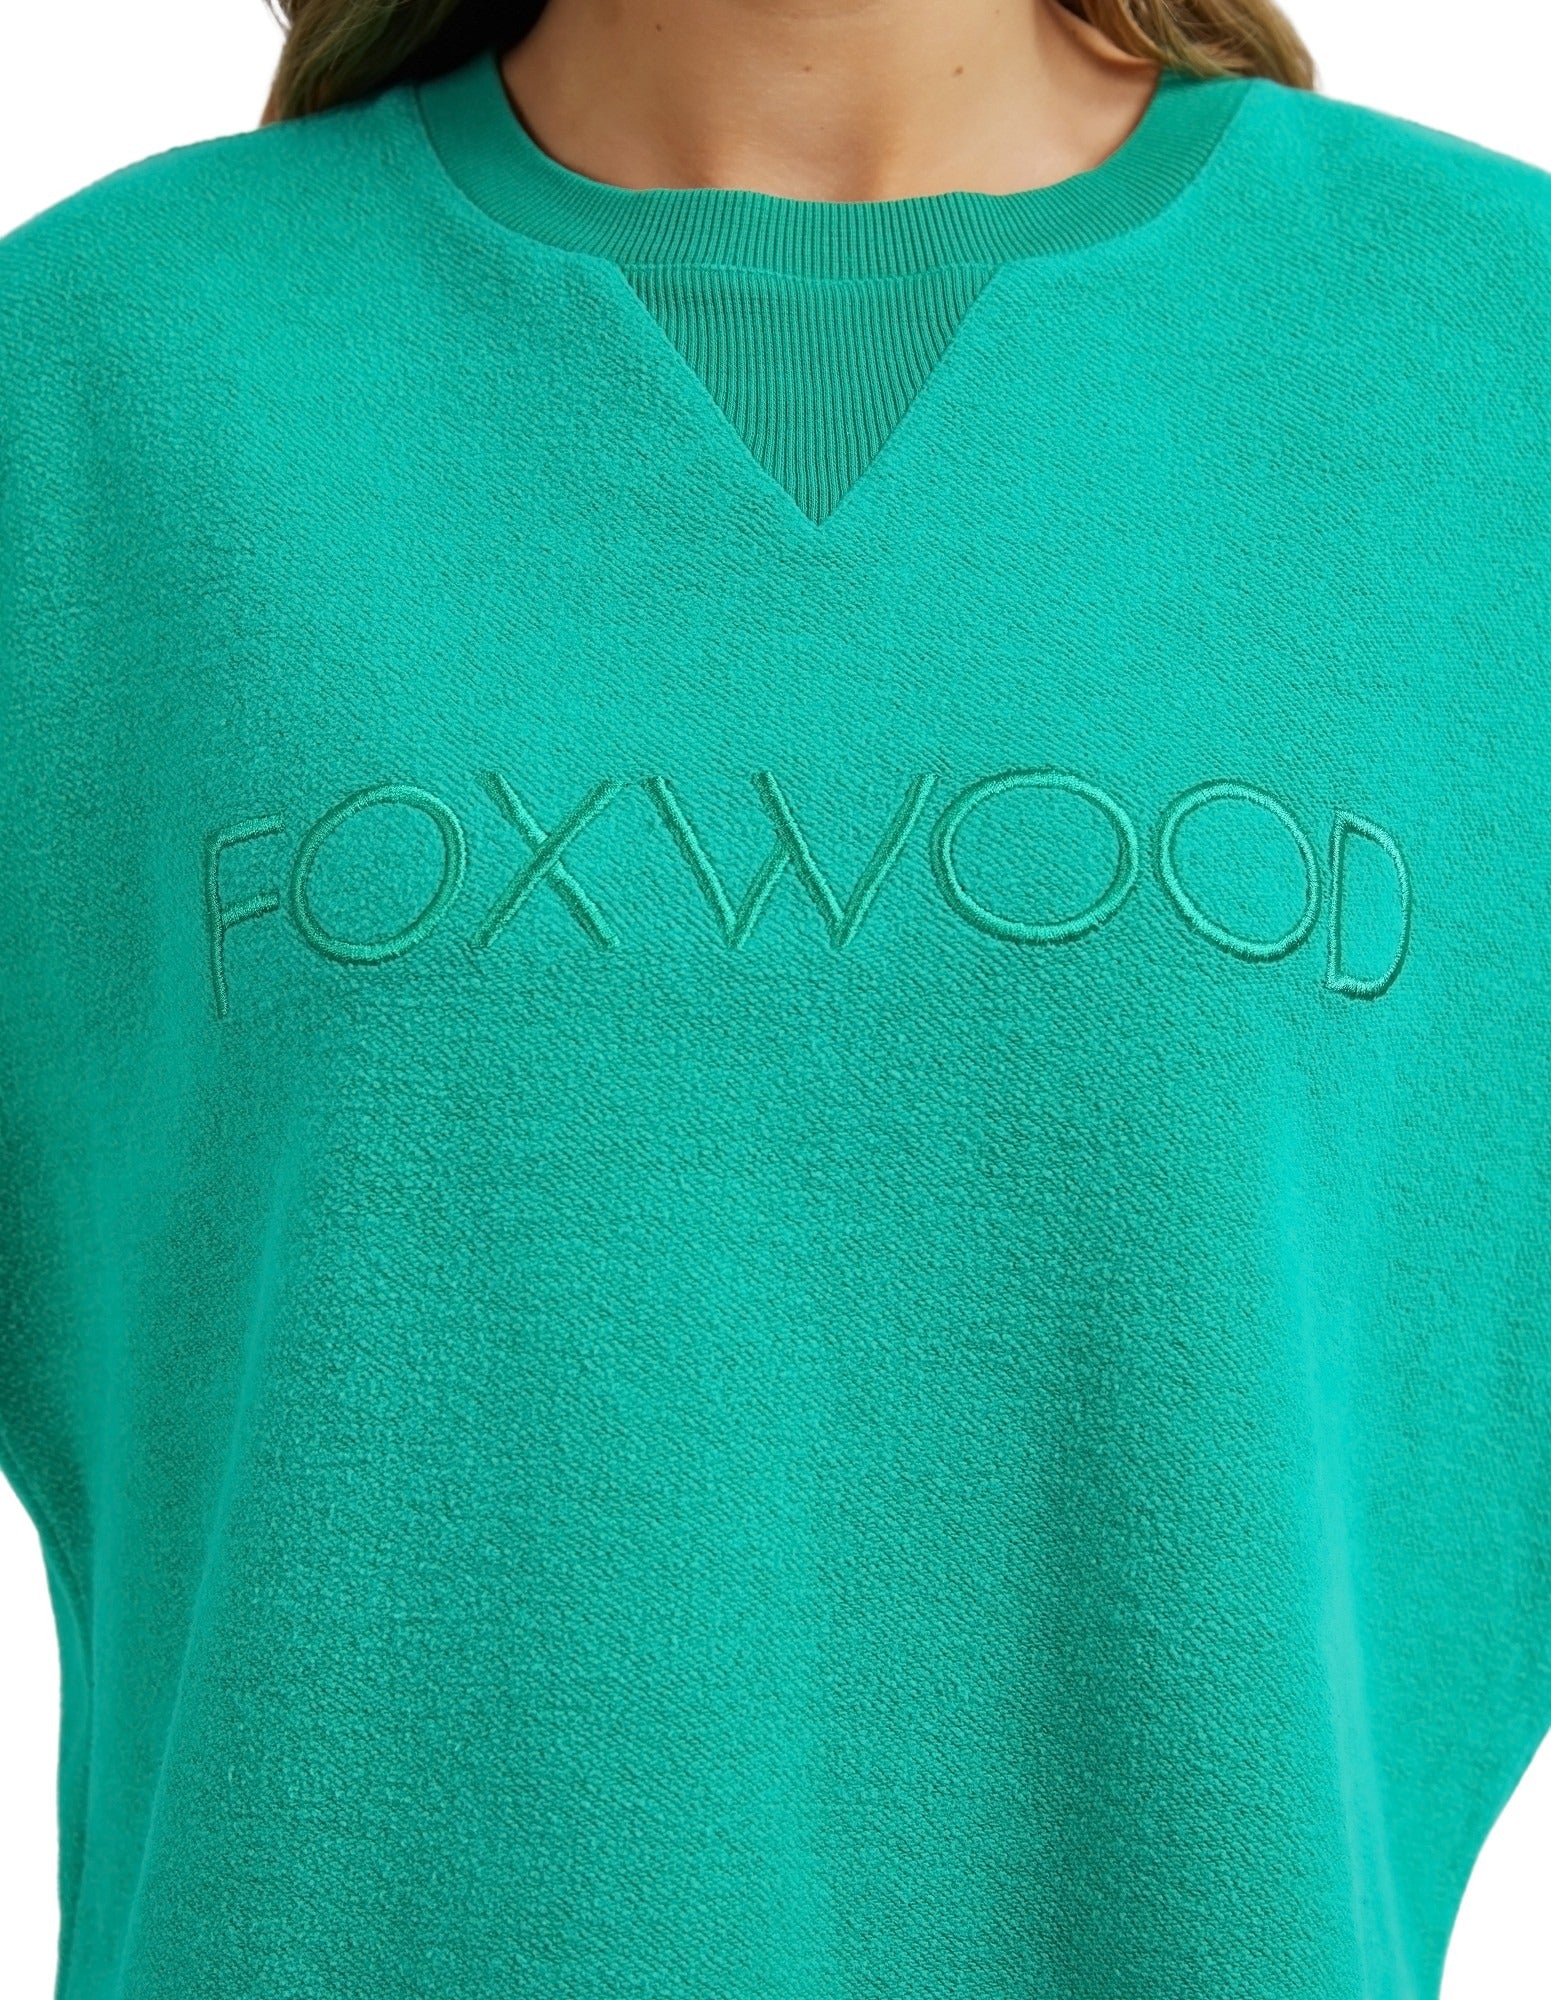 Foxwood Cozy Simplified Crew - Bright Green